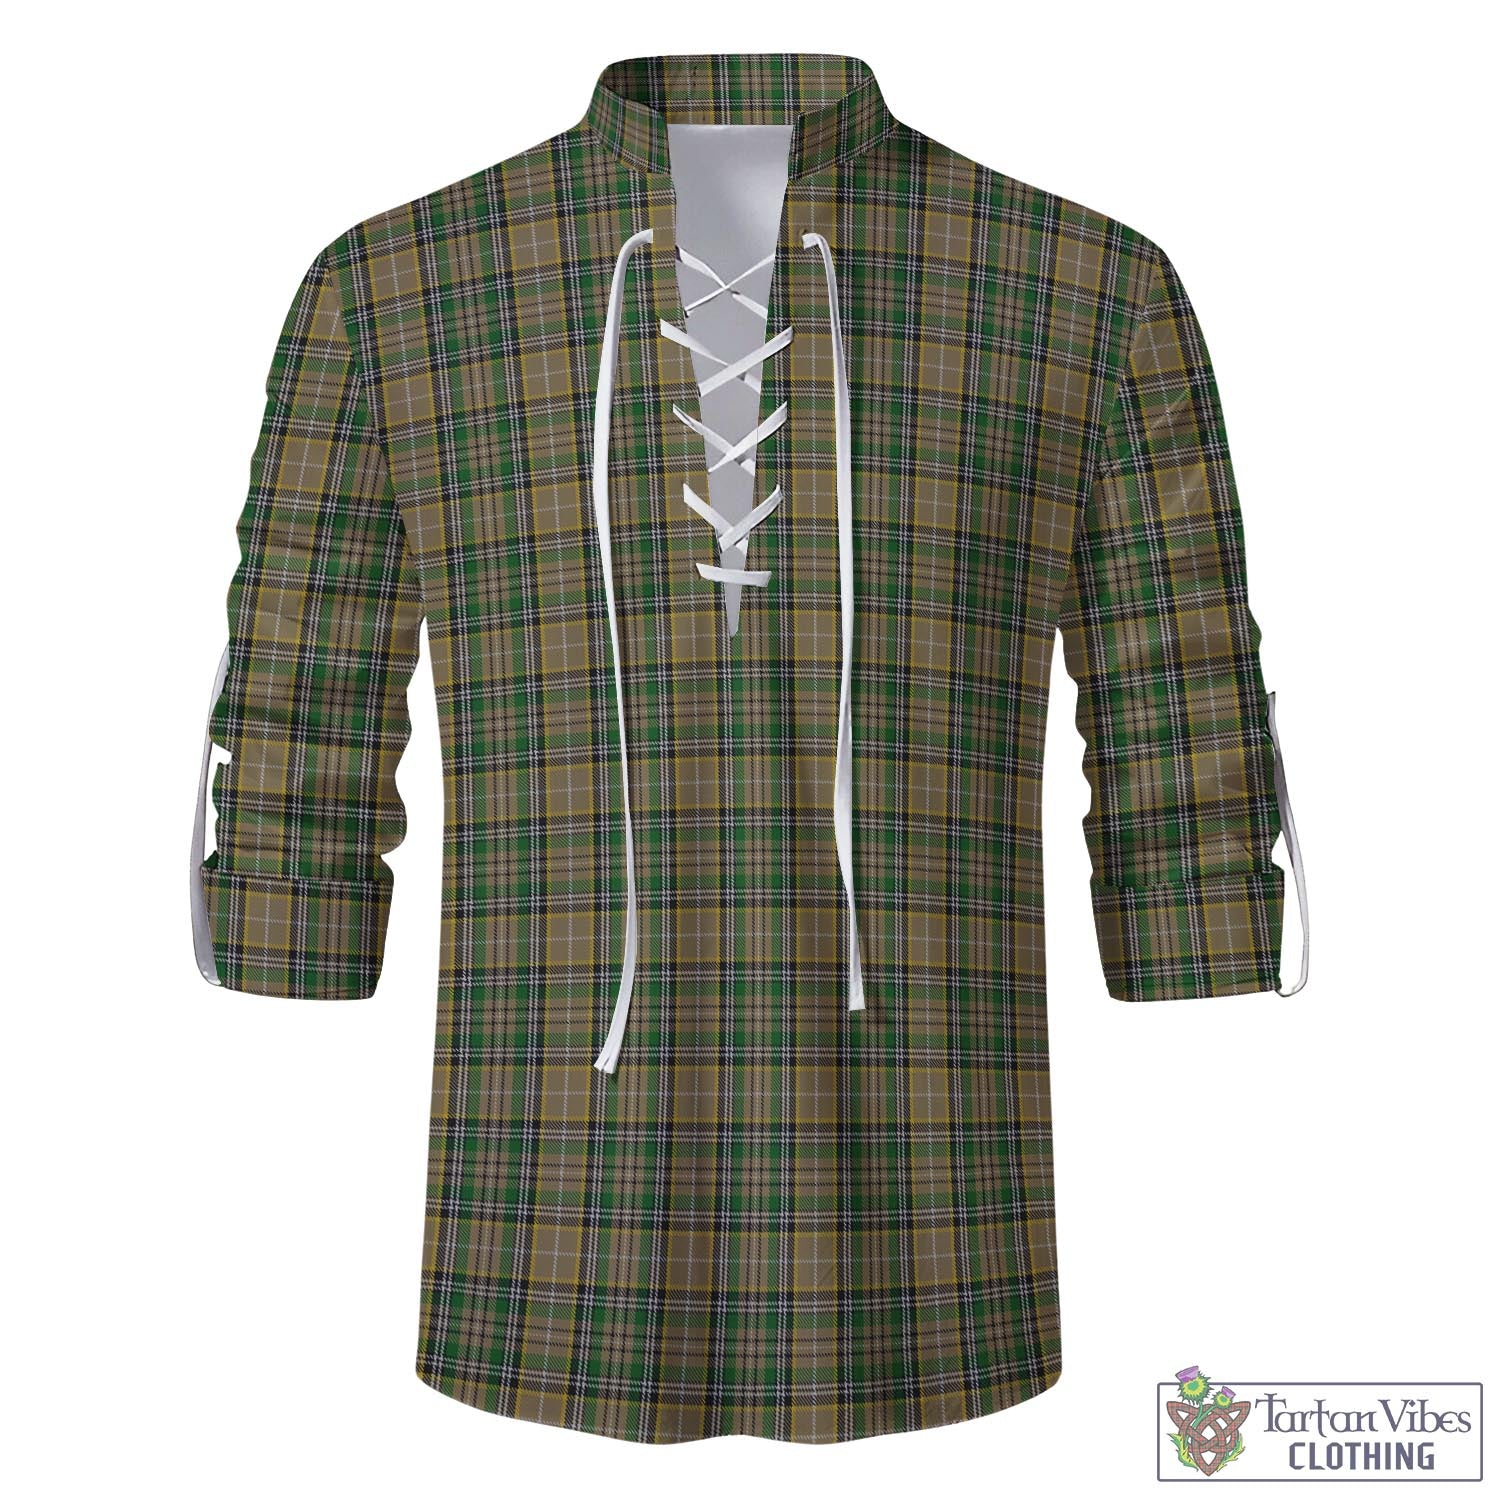 Tartan Vibes Clothing O'Farrell Tartan Men's Scottish Traditional Jacobite Ghillie Kilt Shirt